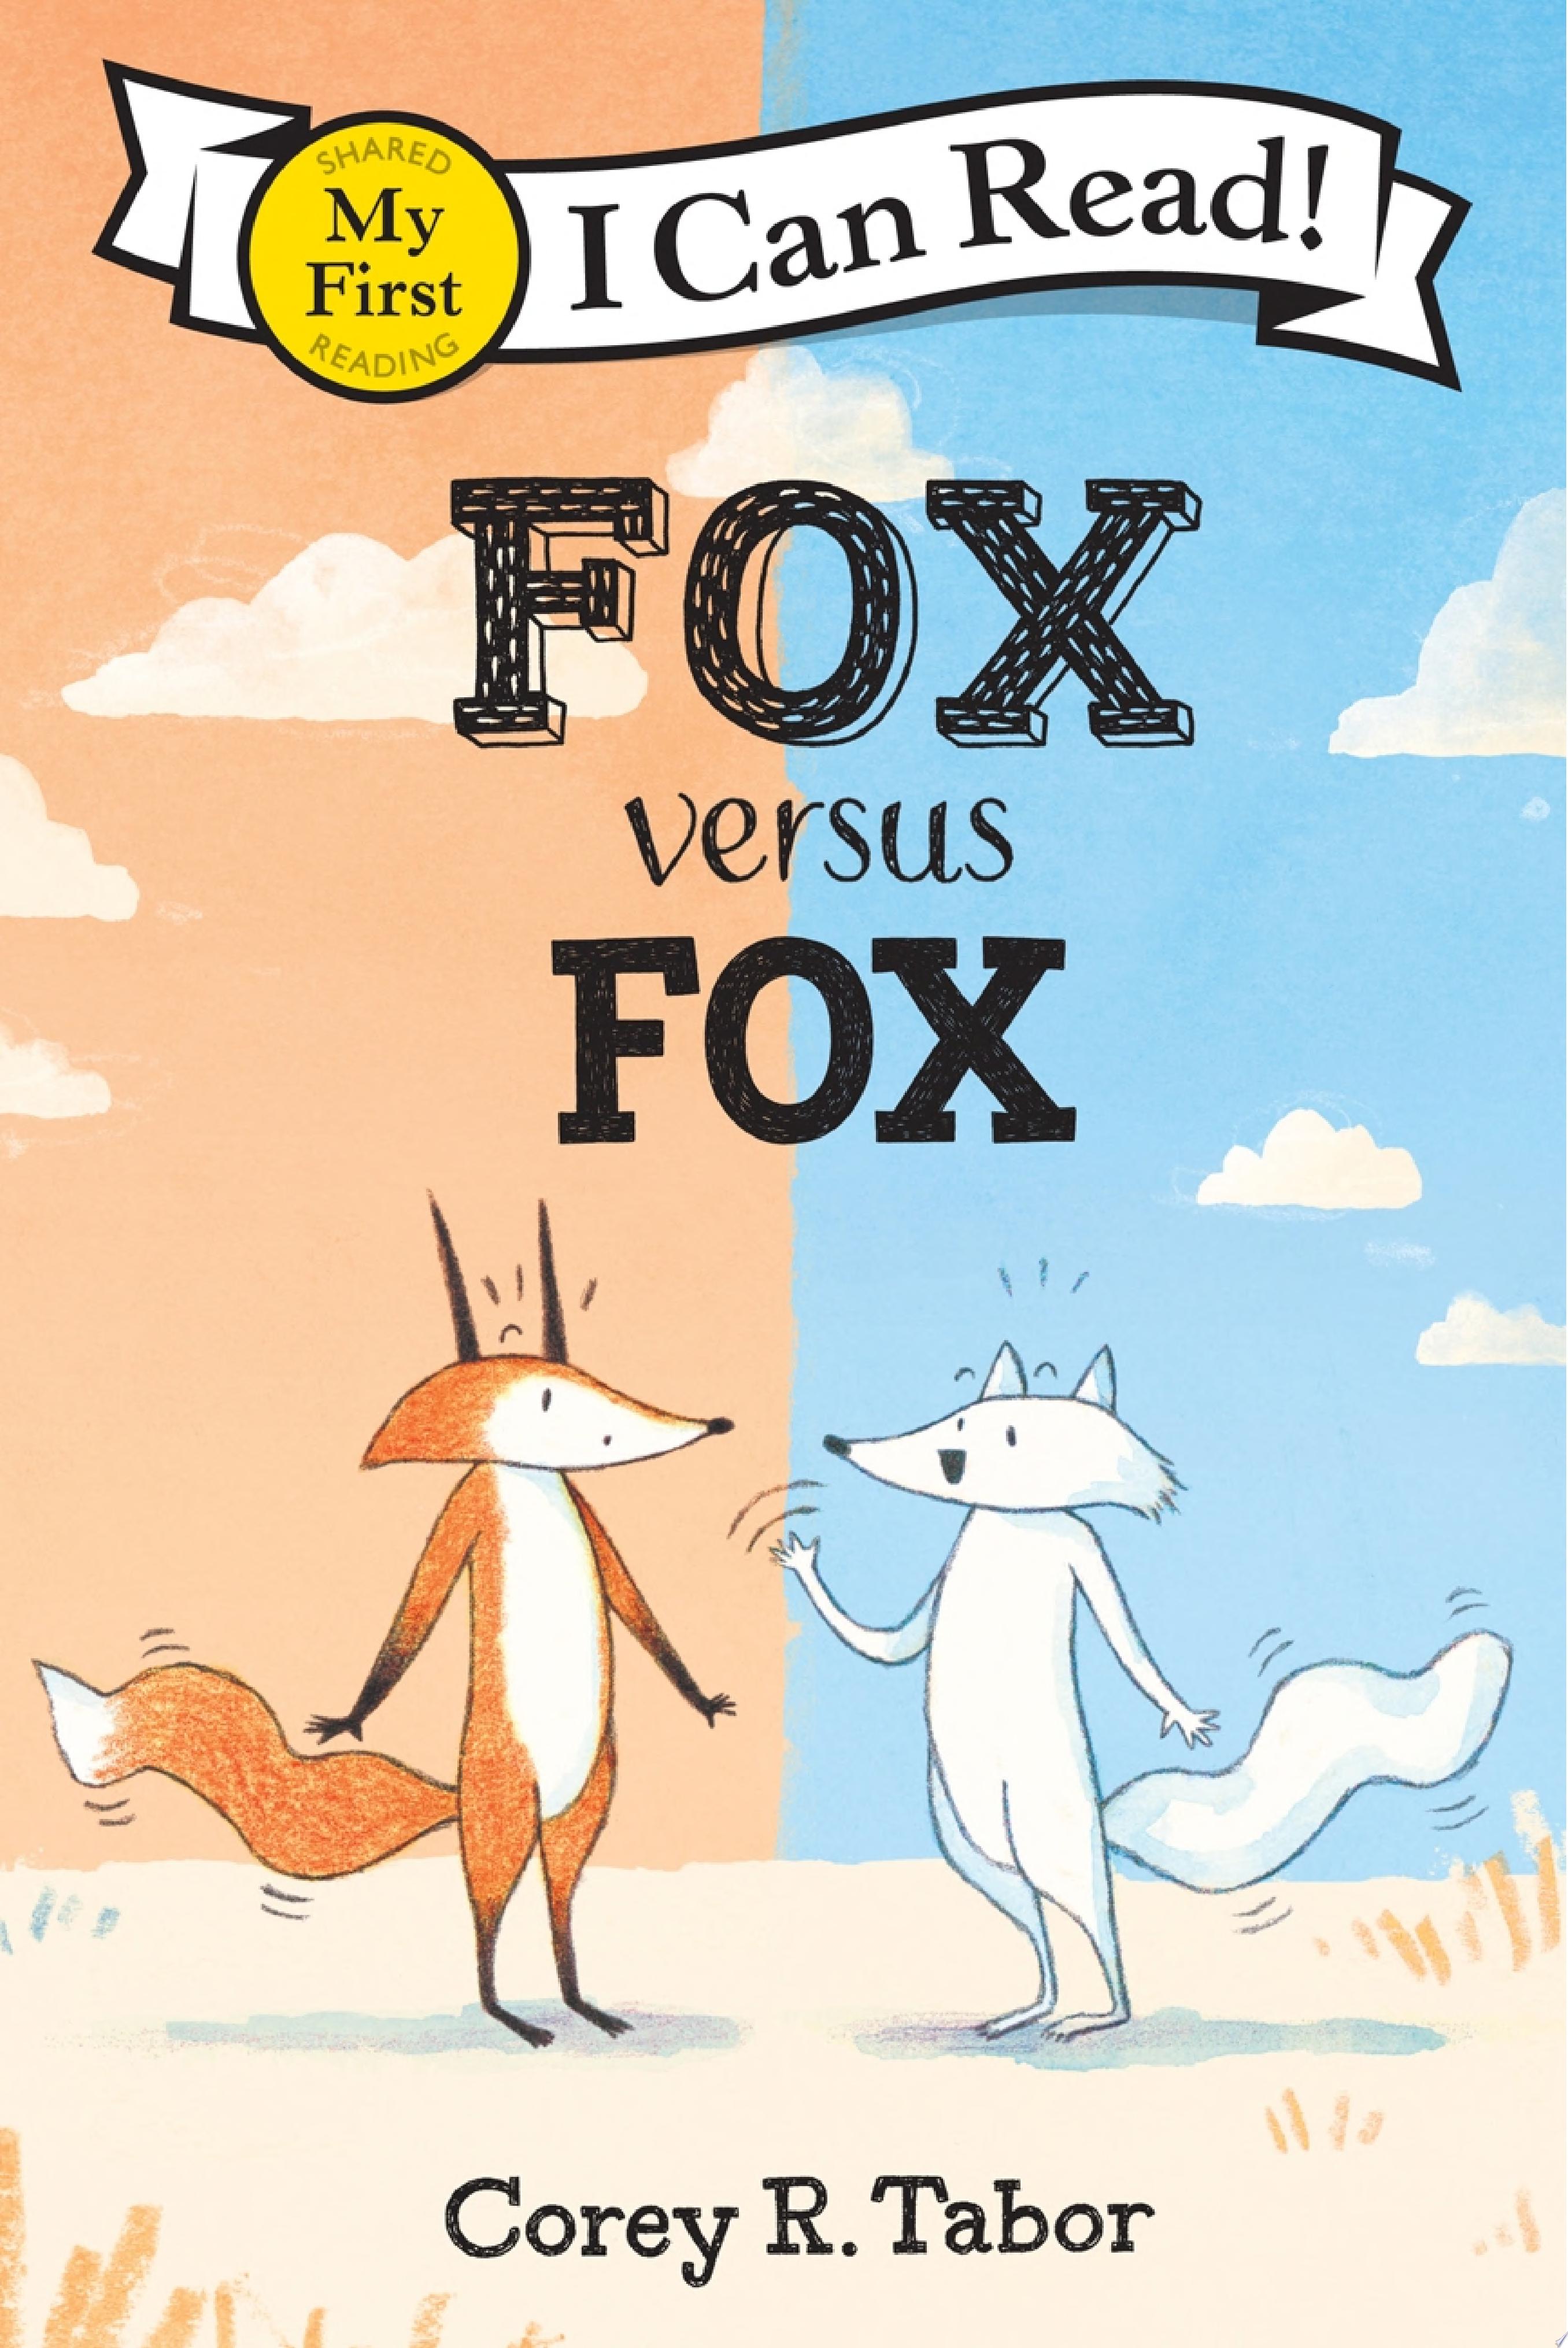 Image for "Fox versus Fox"